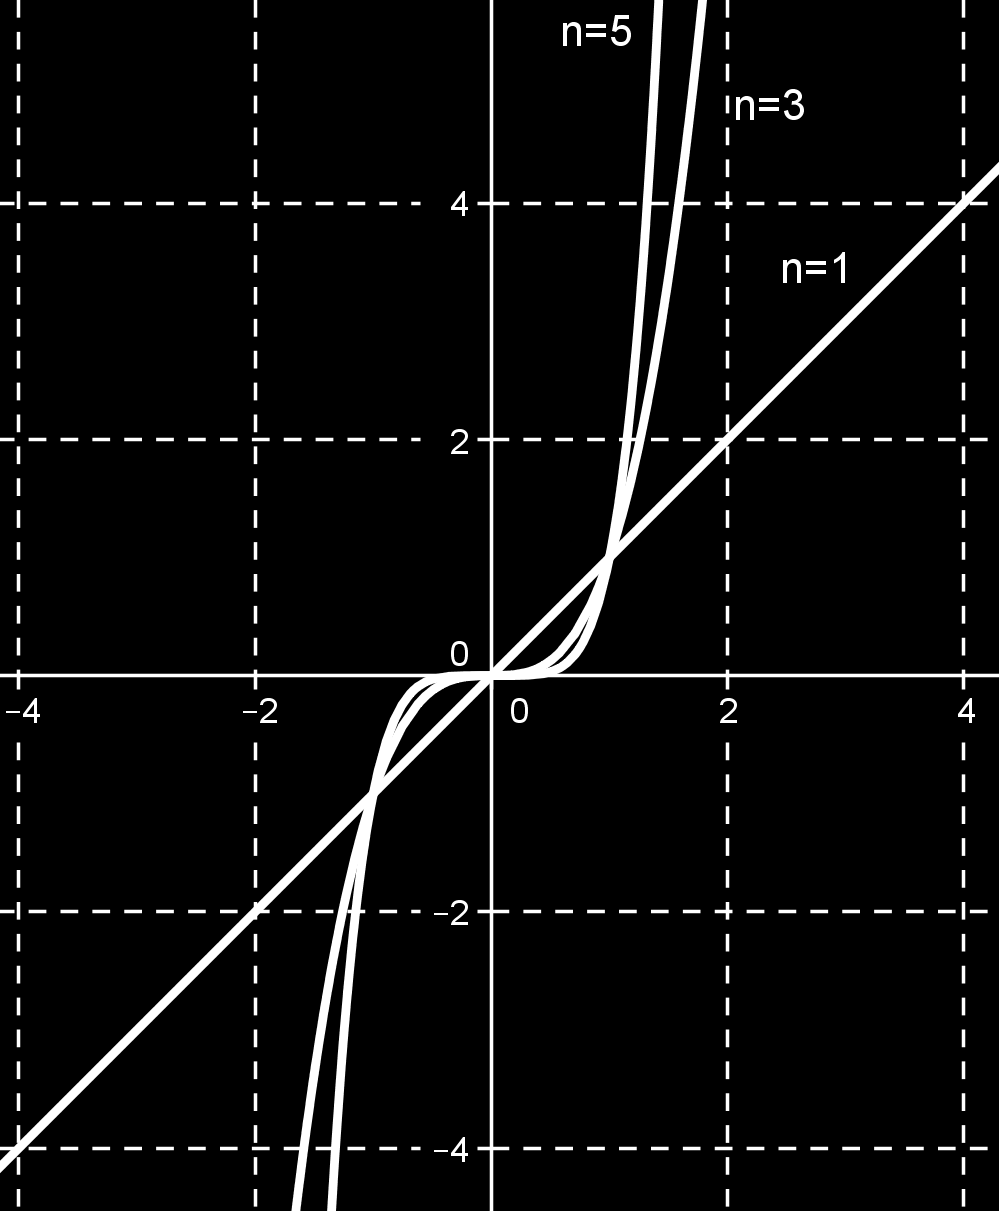 Funzione potenza y = a n, a > 0 (a < 0), con n naturale